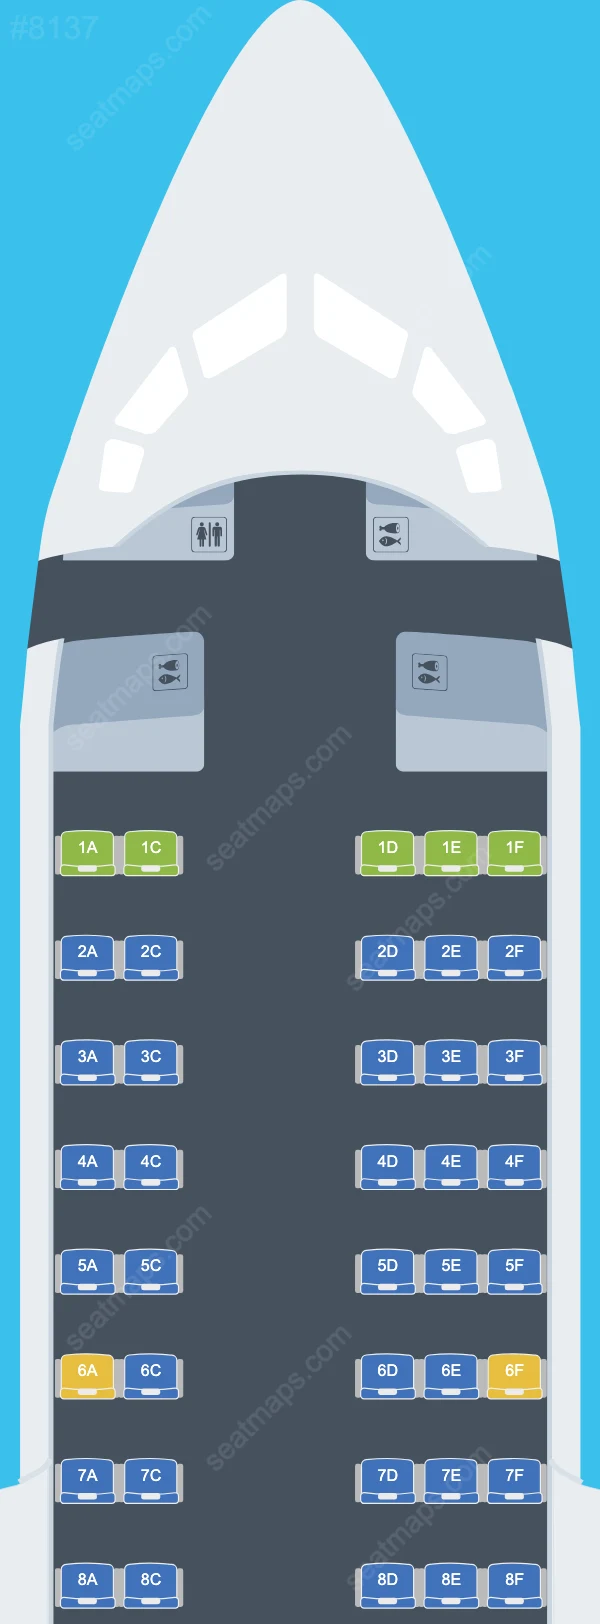 Aerovías DAP Avro RJ100 Avroliner Seat Maps RJ100